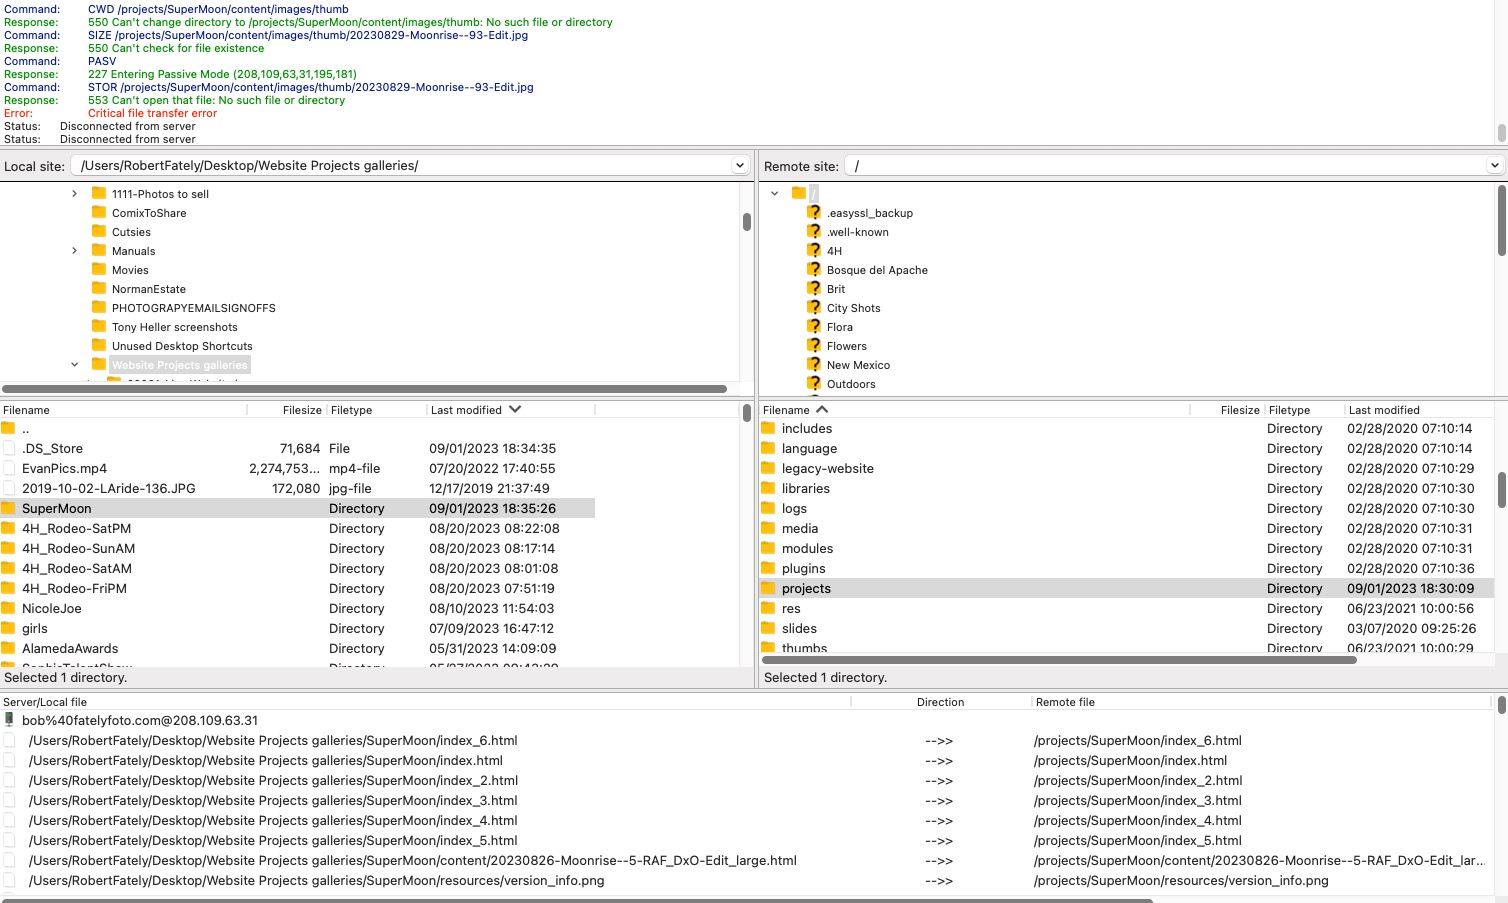 screenshot of FIleZilla window showing directories etc.